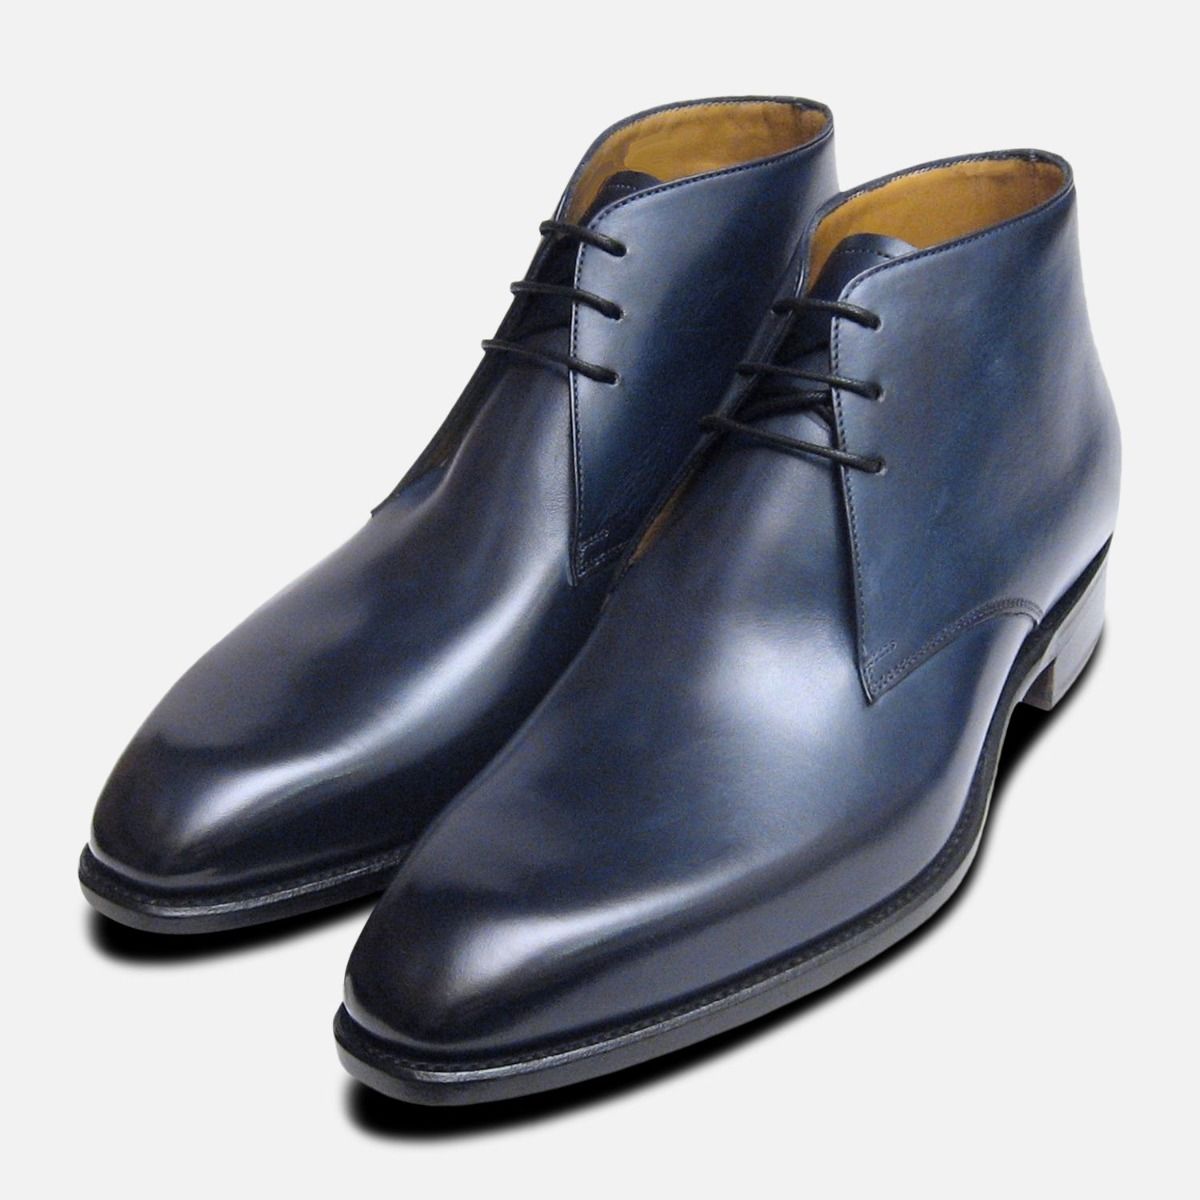 blue leather chukka boots